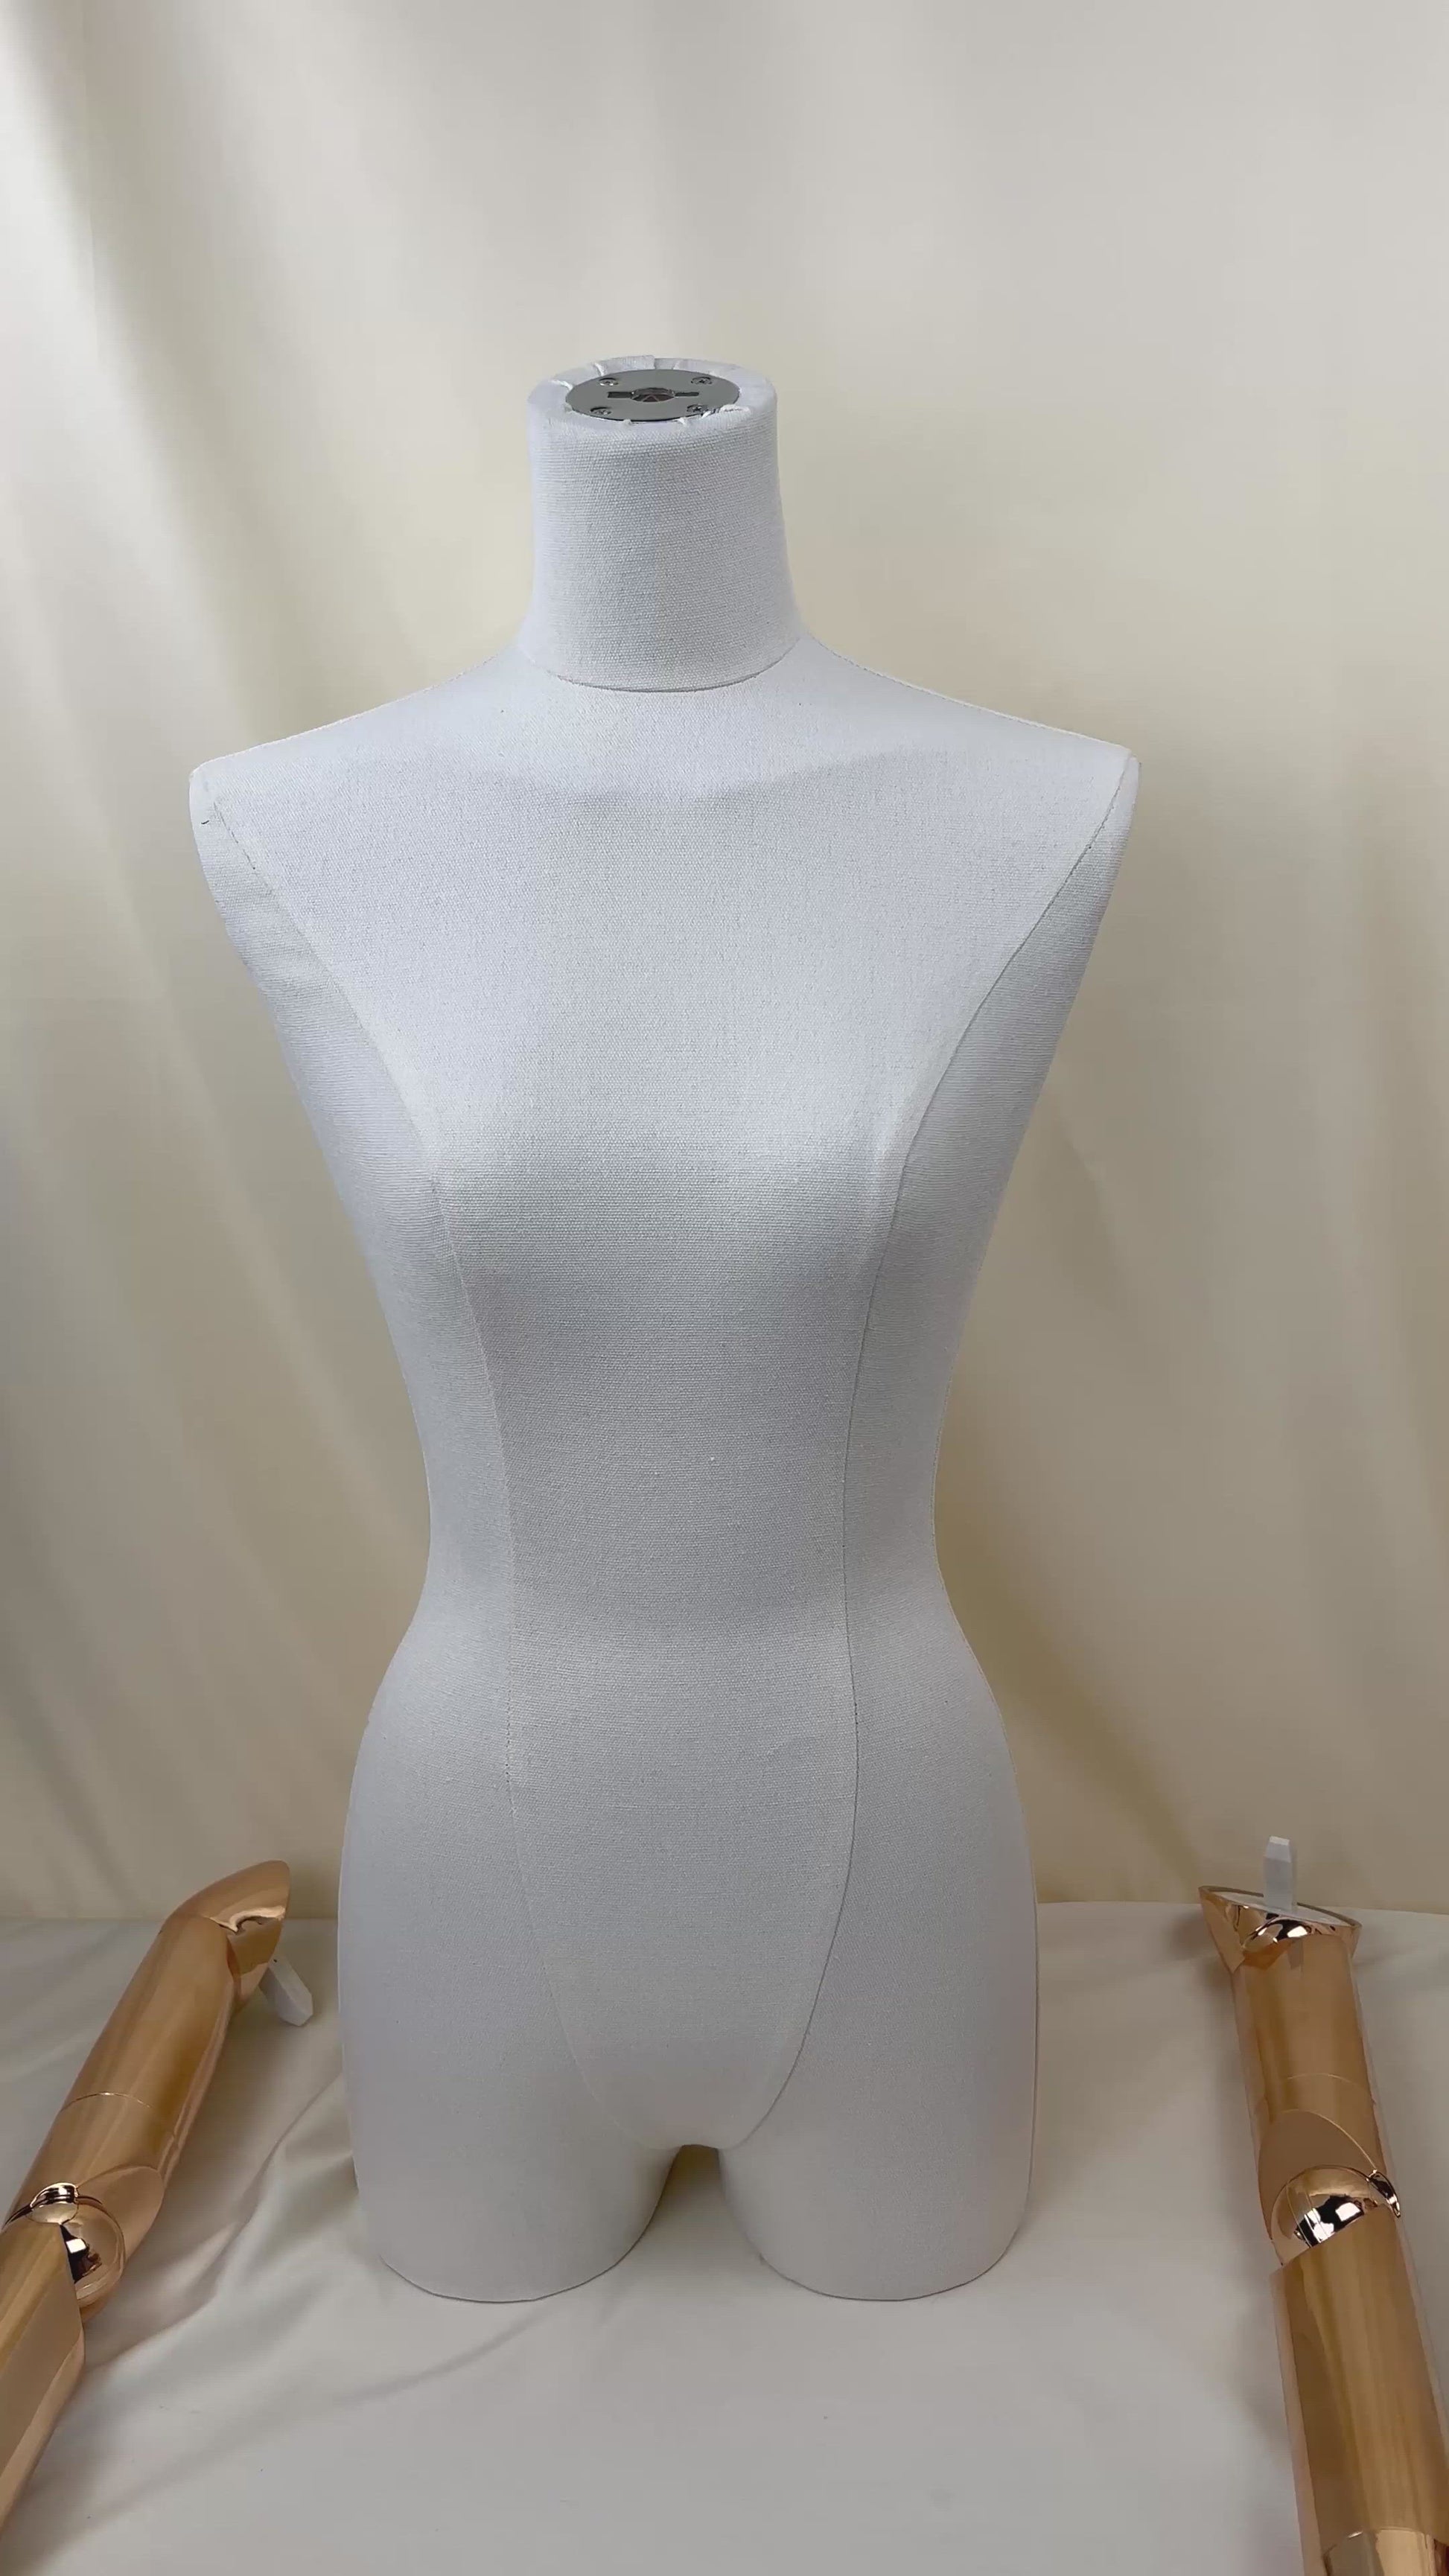  DE-LIANG Female Torso Dress Form Mannequin with Golden Arms  Blue Velvet Half Body with Adjustable Height Square Metal Base, Female  (Blue Velvet) : Industrial & Scientific